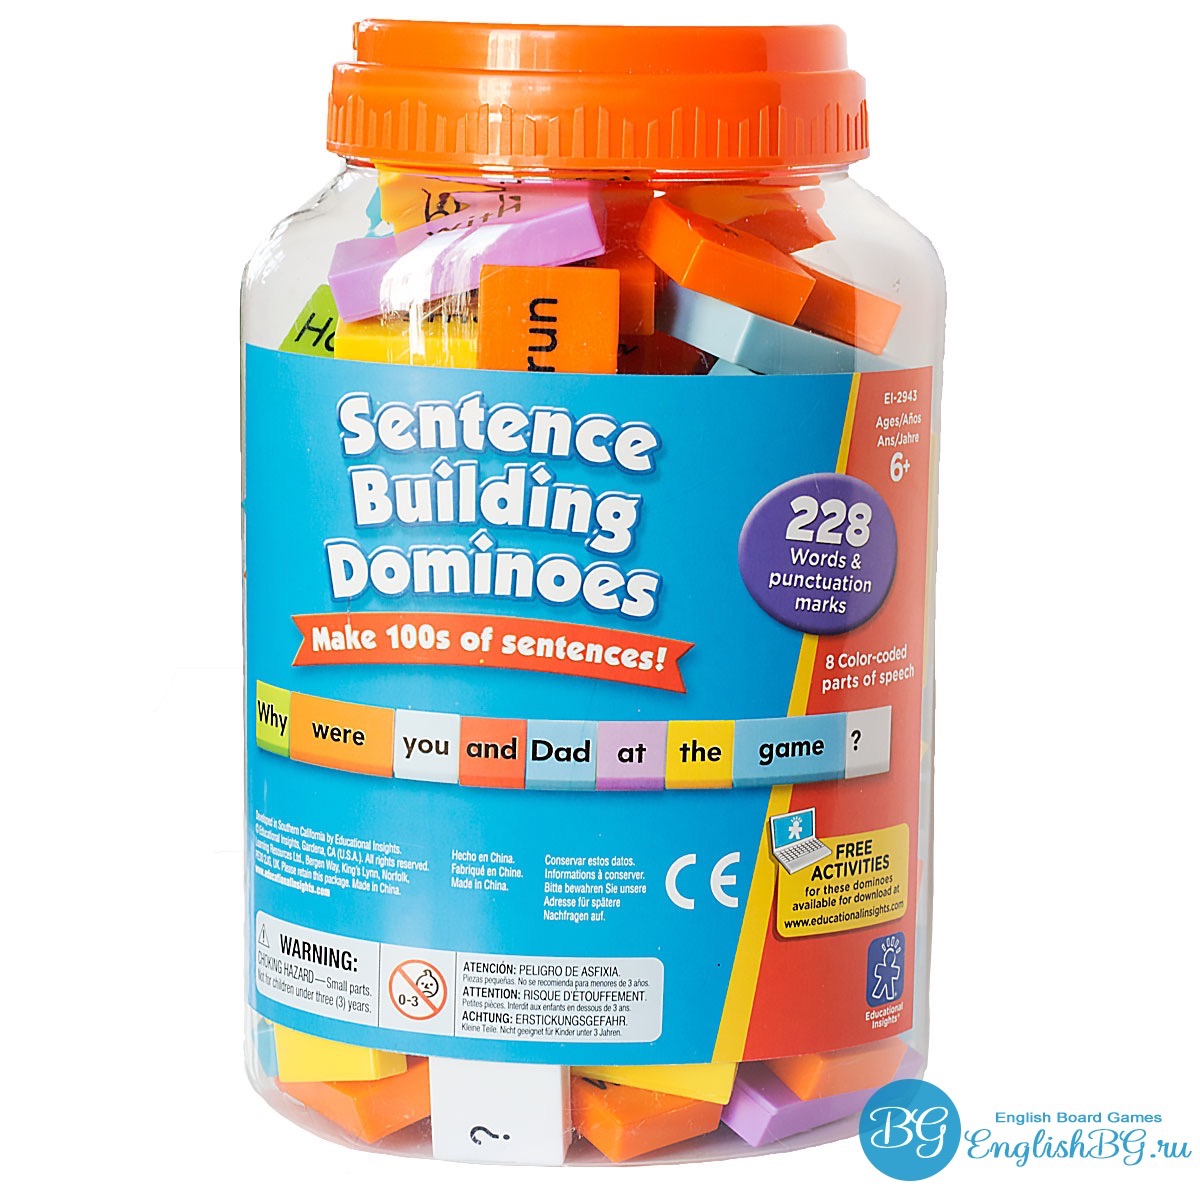 Sentence Building Dominoes